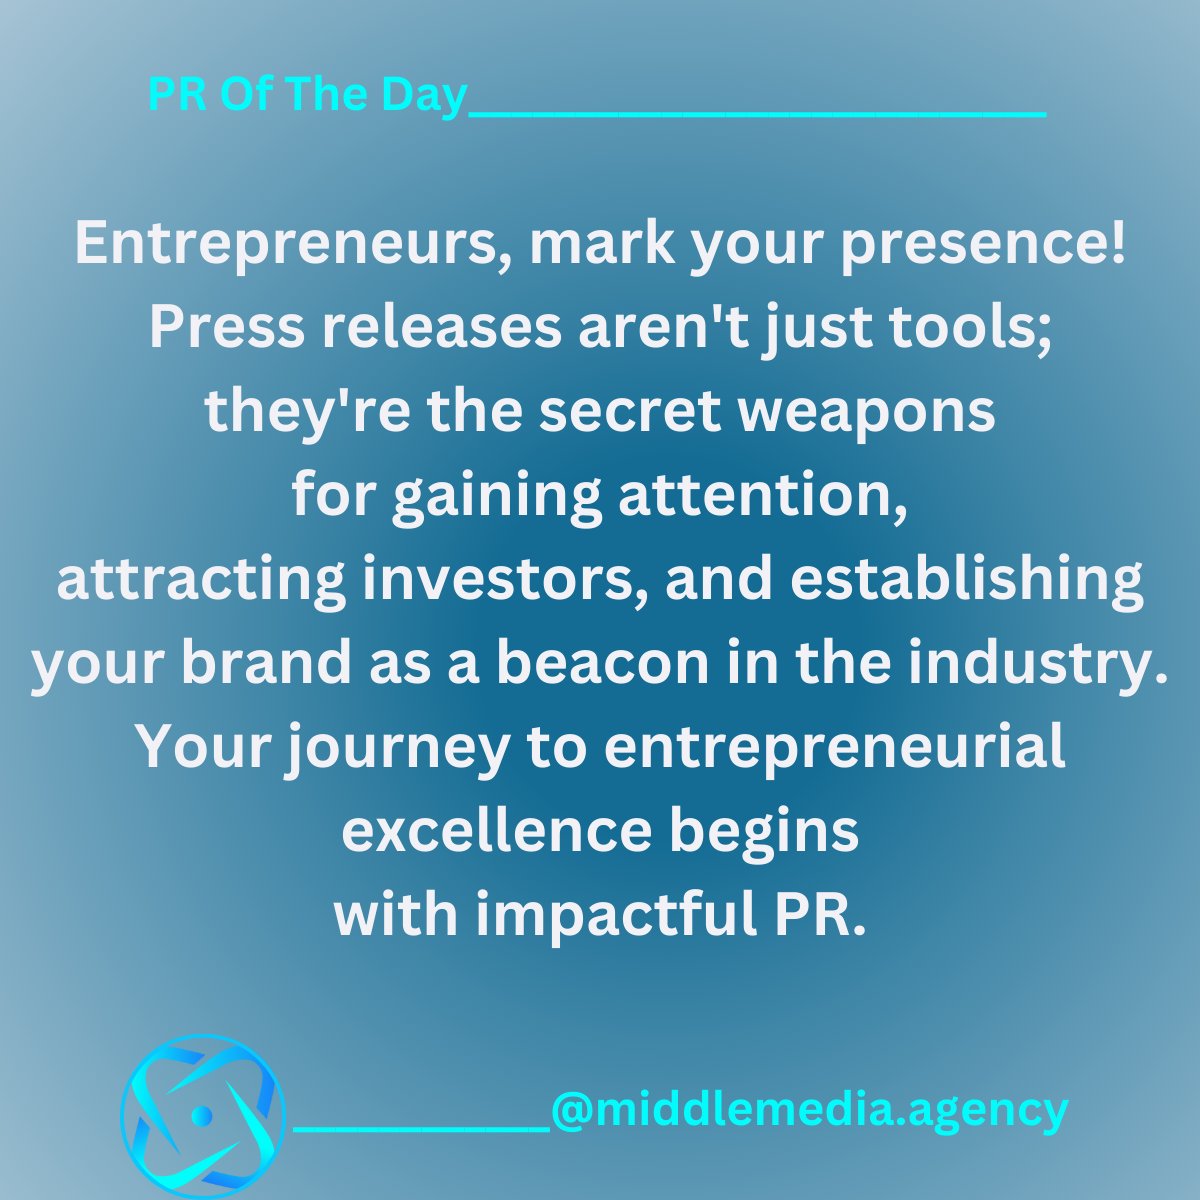 🌍 Entrepreneurs, mark your presence! 🚀

Let's discuss and shape the future of innovation together!

👉 middlemedia.agency

#EntrepreneurialPRJourney #BrandExcellence #PublicRelations #Media #Brand #PressRelease #PR